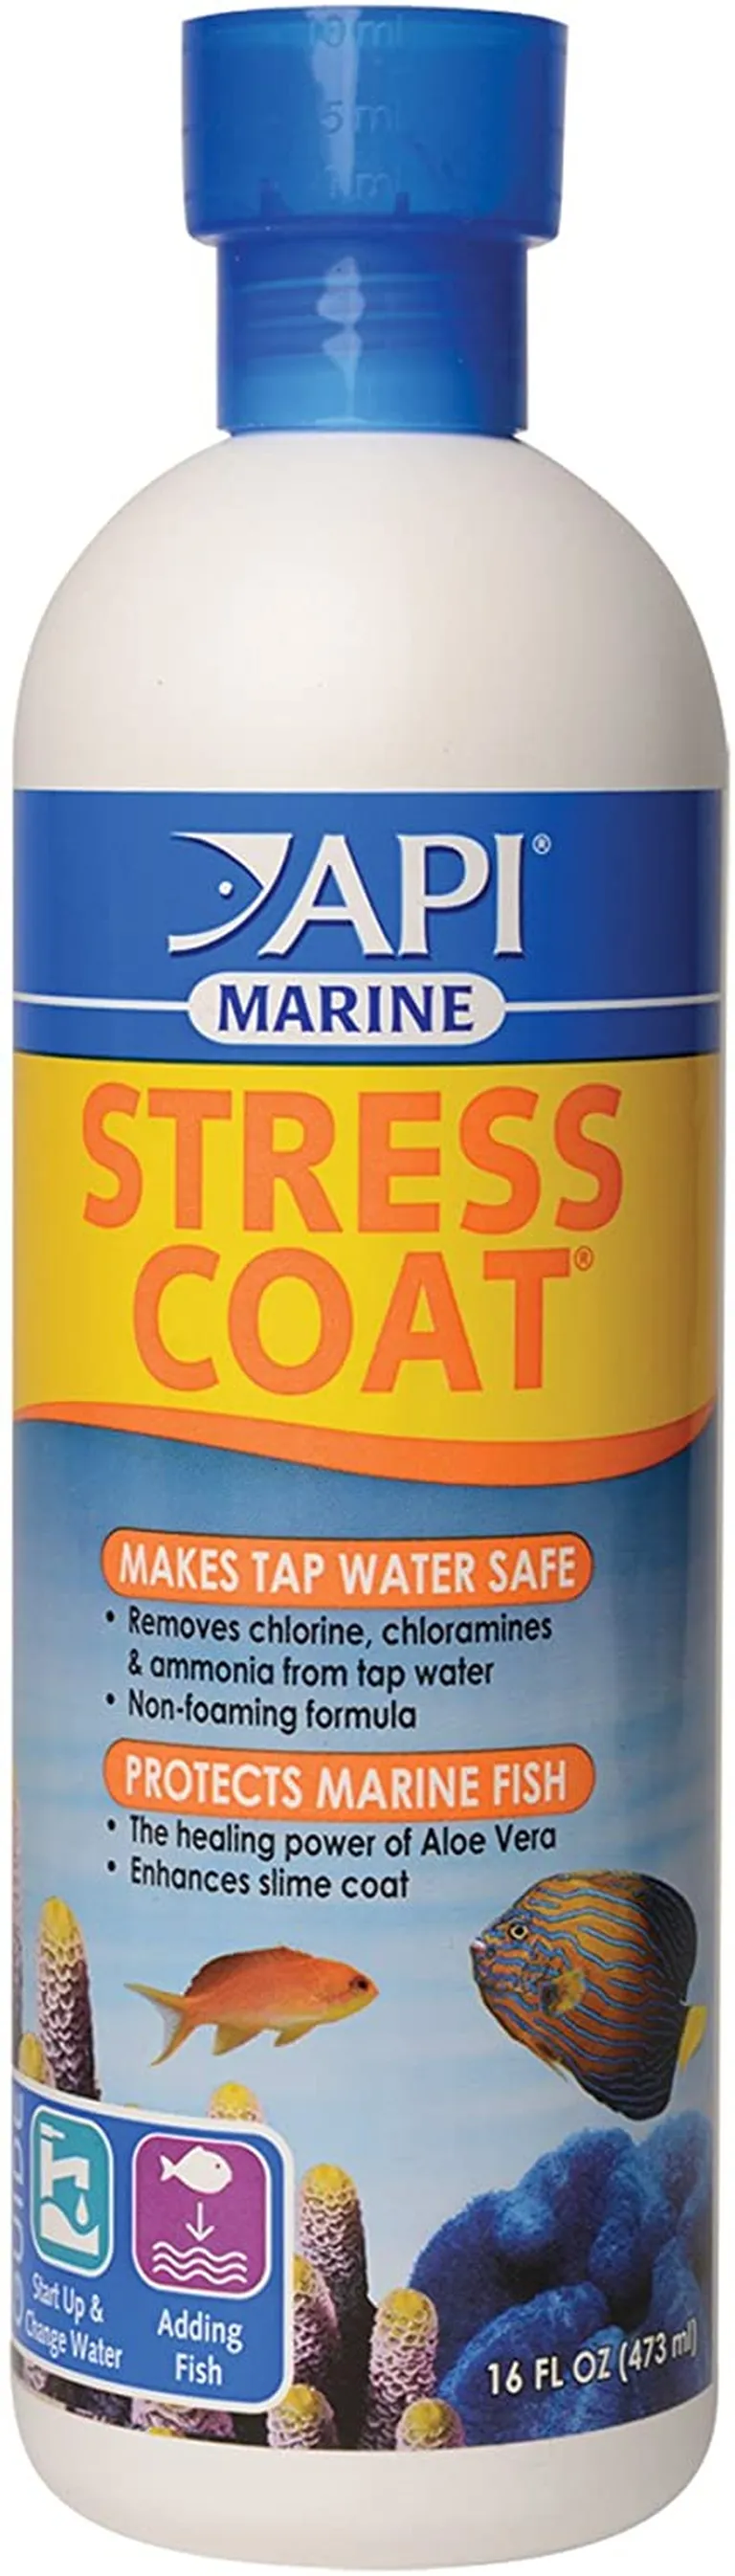 API Marine Stress Coat Makes Tap Water Safe Photo 2